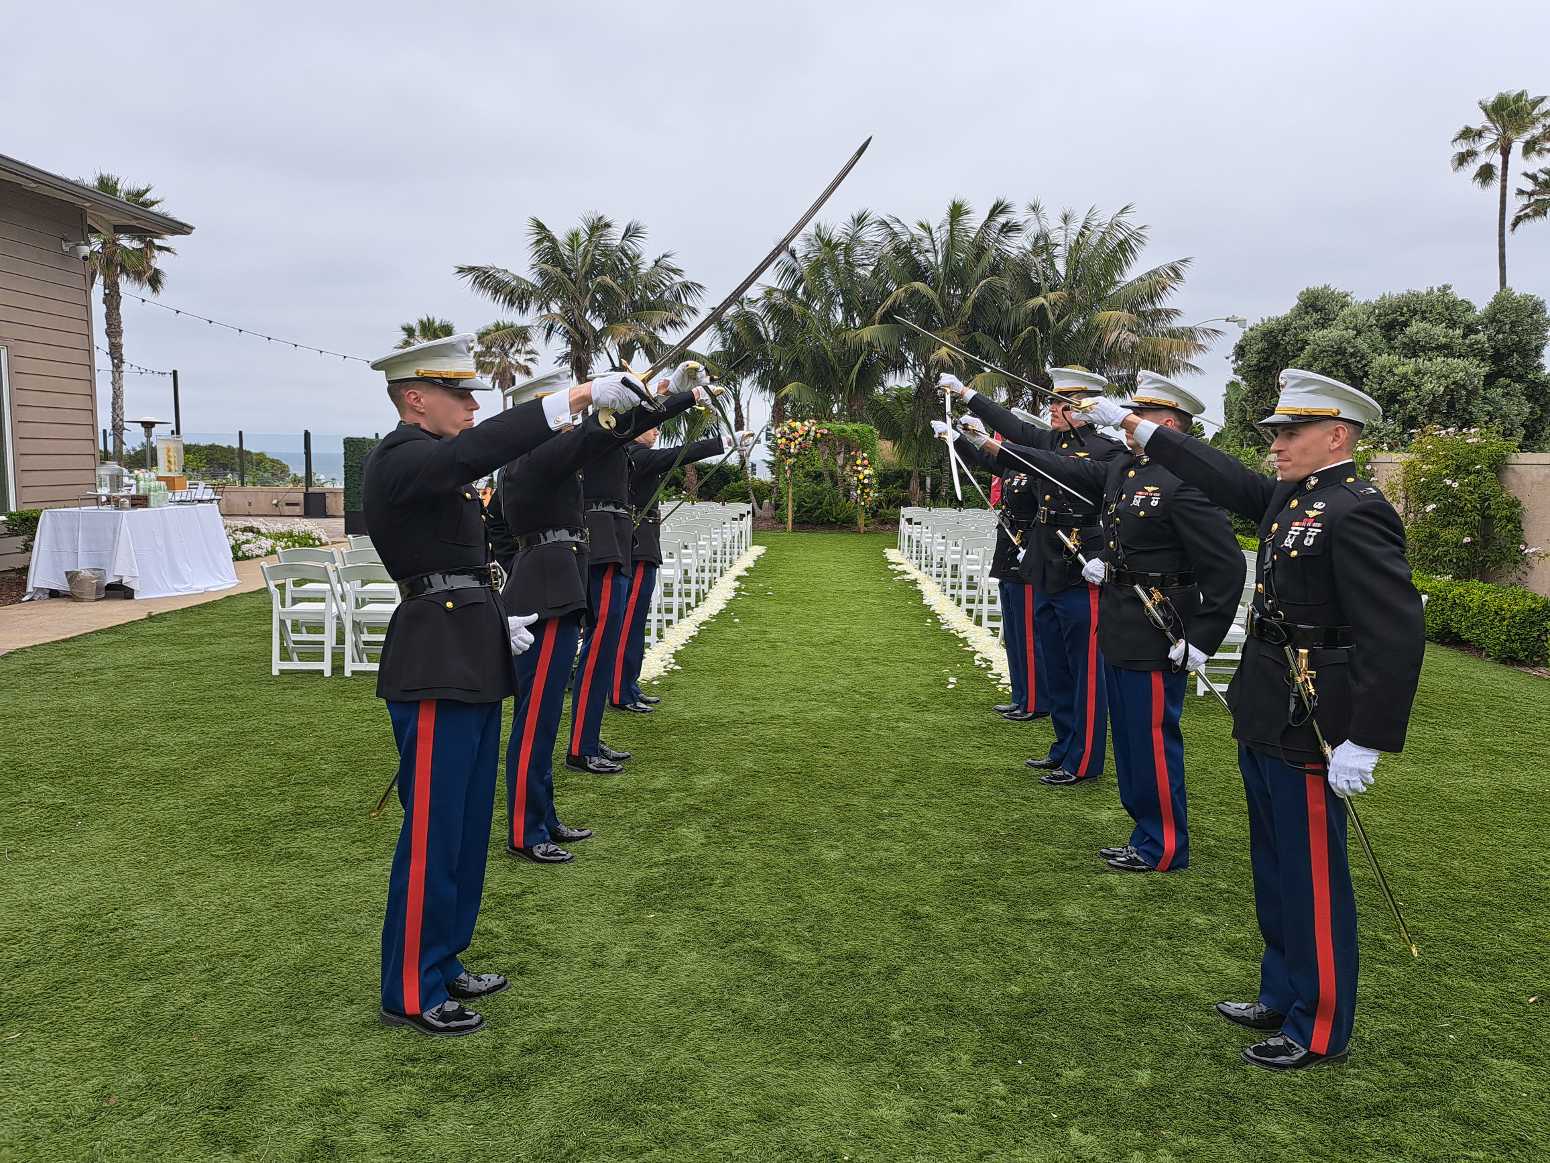 Marines raise their swords at a military wedding